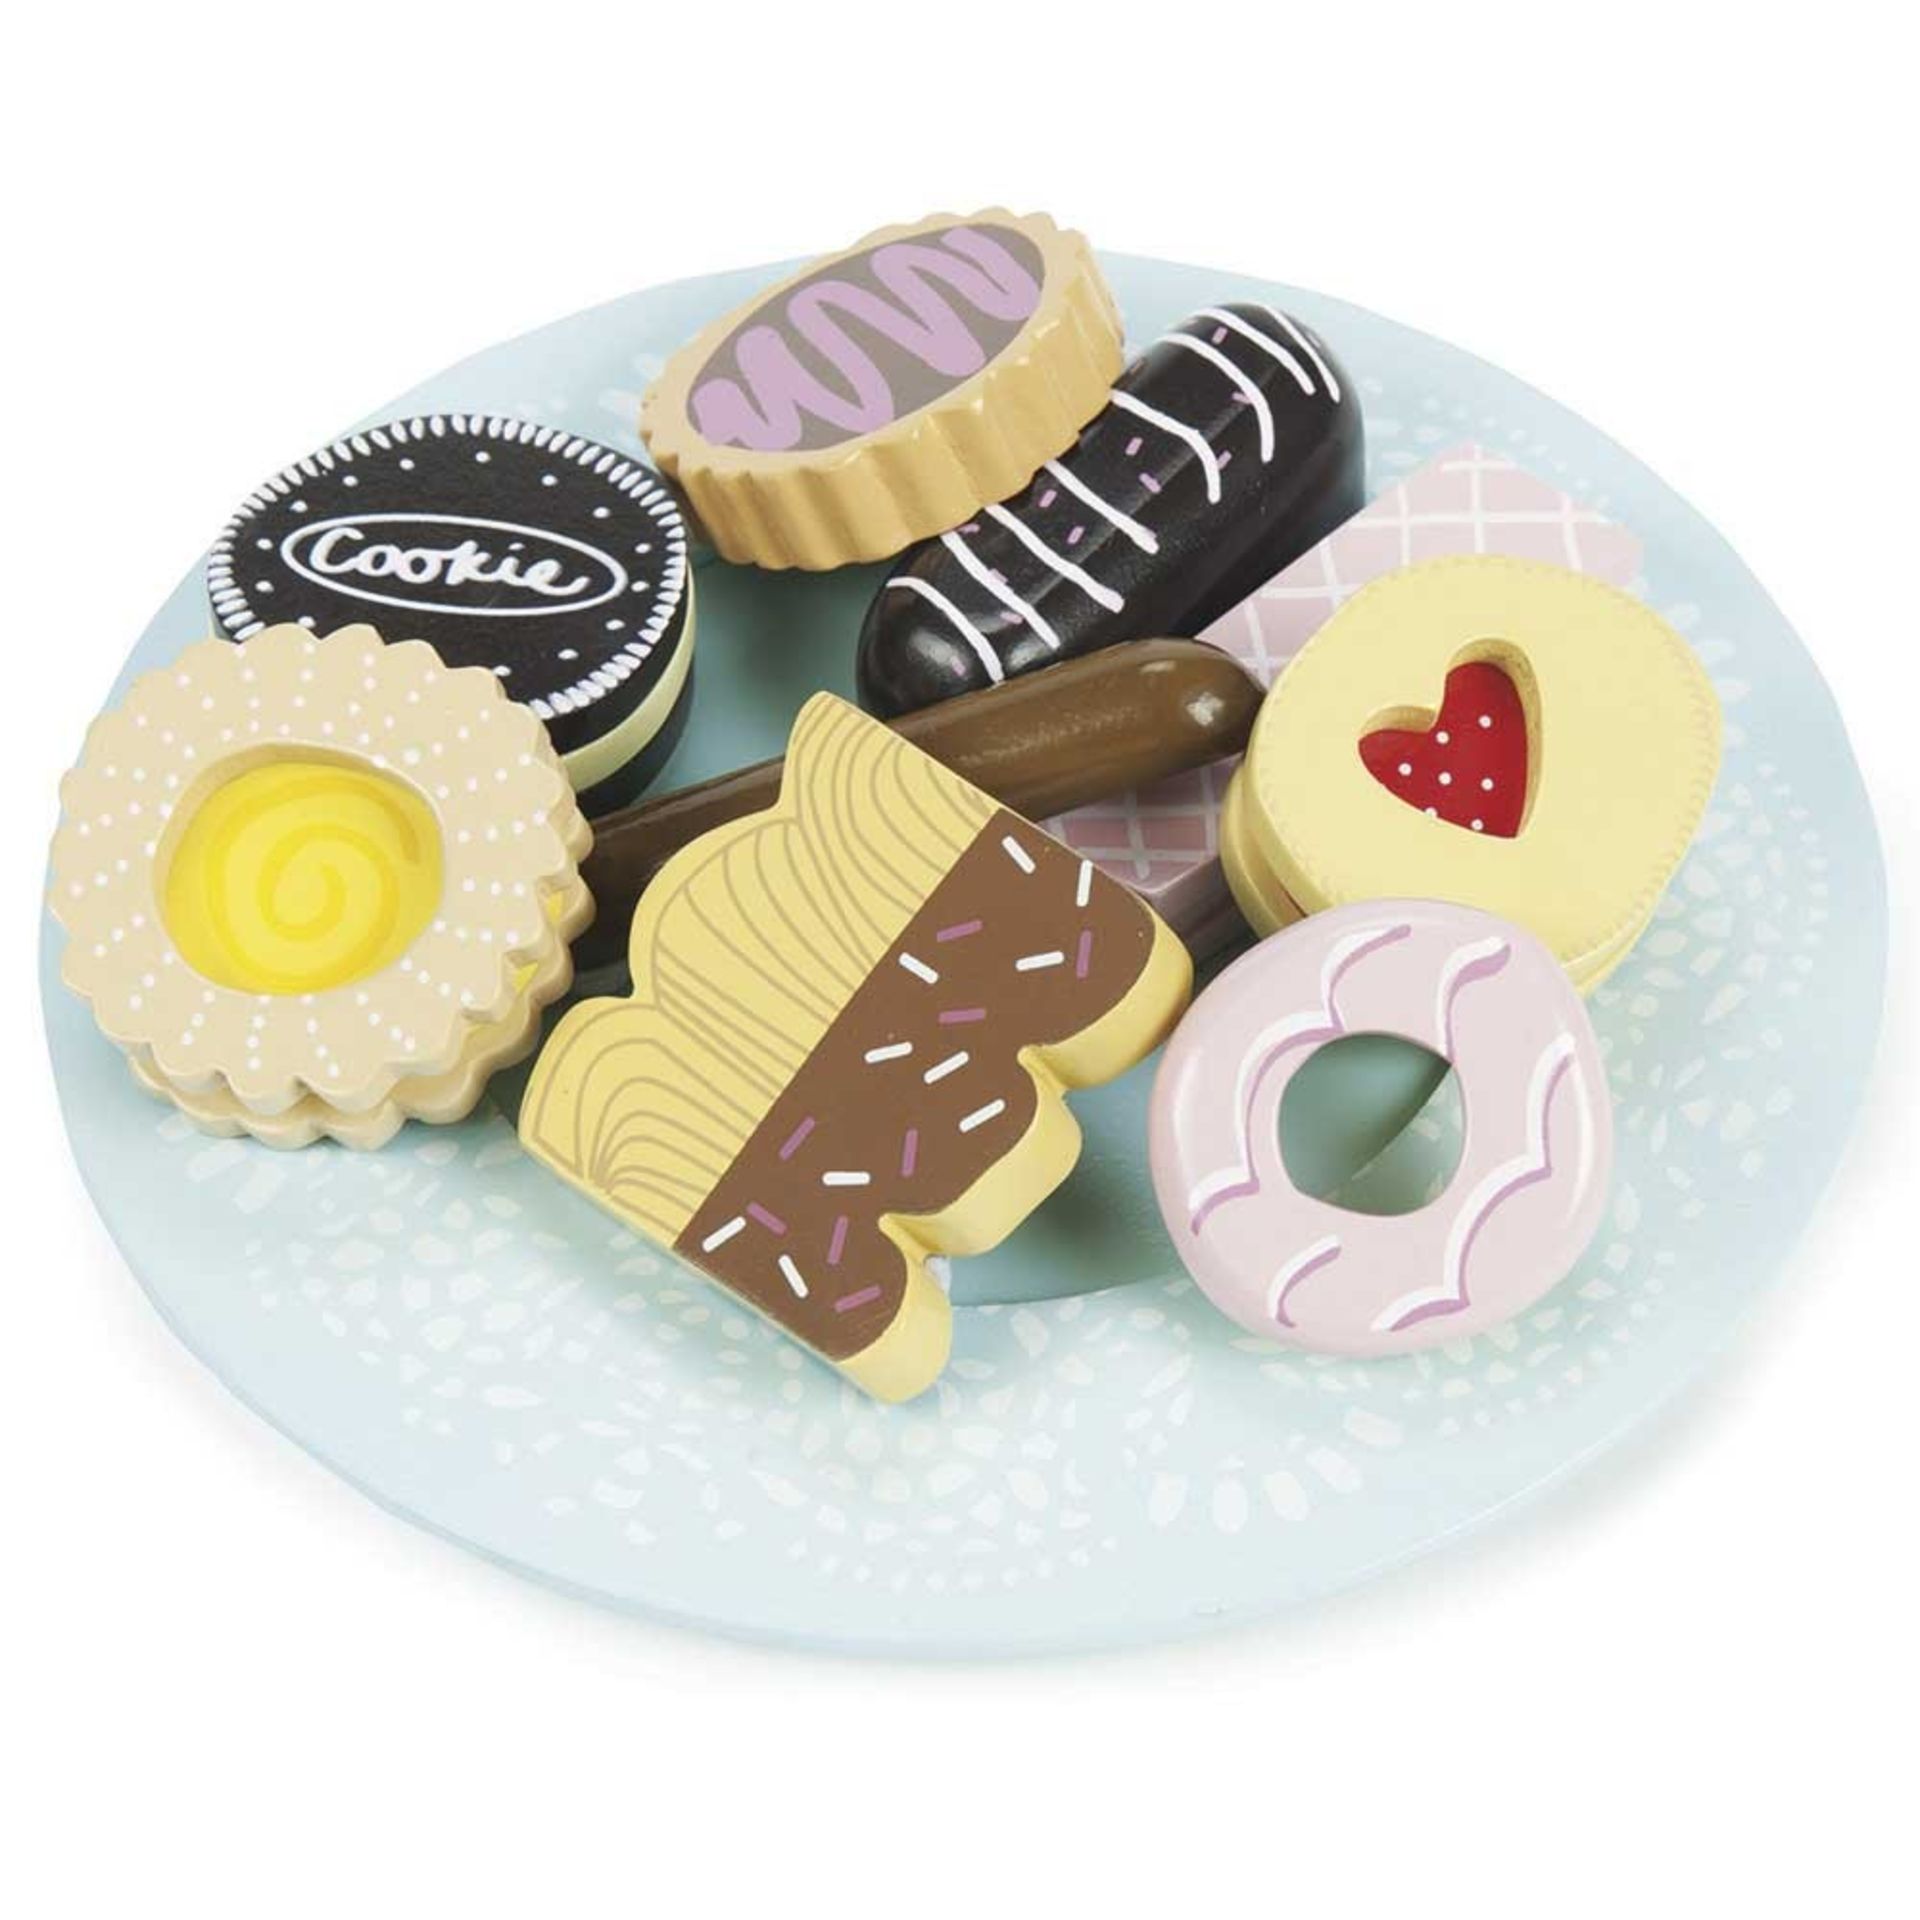 V Brand New Le Toy Van Honeybake Biscuits & Plate Set Online Price £20 (Jojo Maman Bebe)